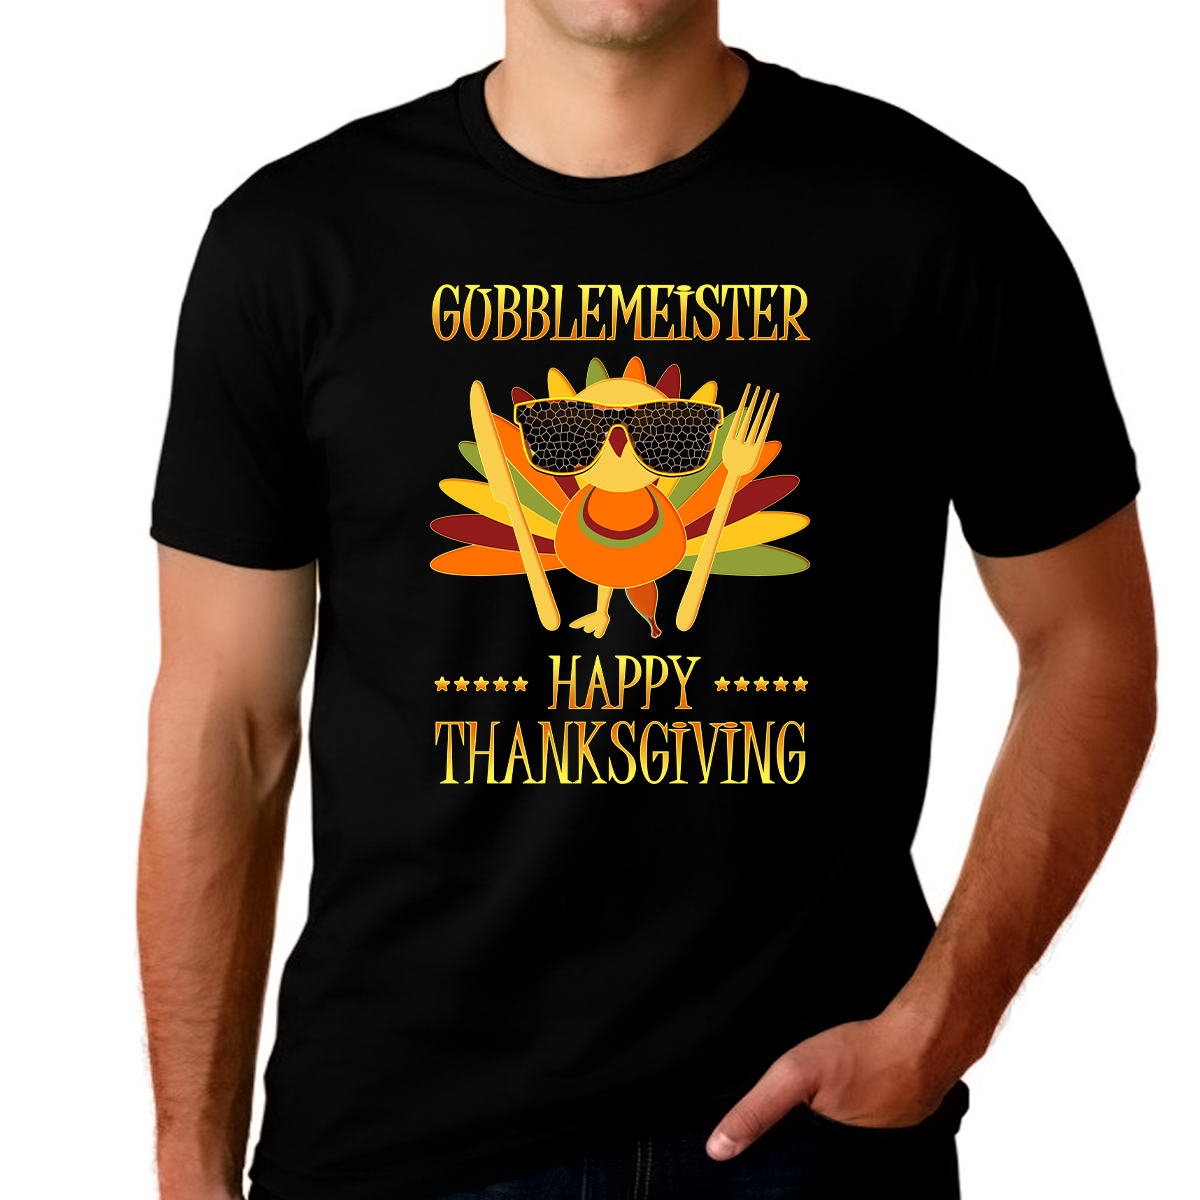 Big and Tall Thanksgiving Shirts for Plus Size Men XL 2XL 3XL 4XL 5XL Fall Gobble Turkey Shirt for Men